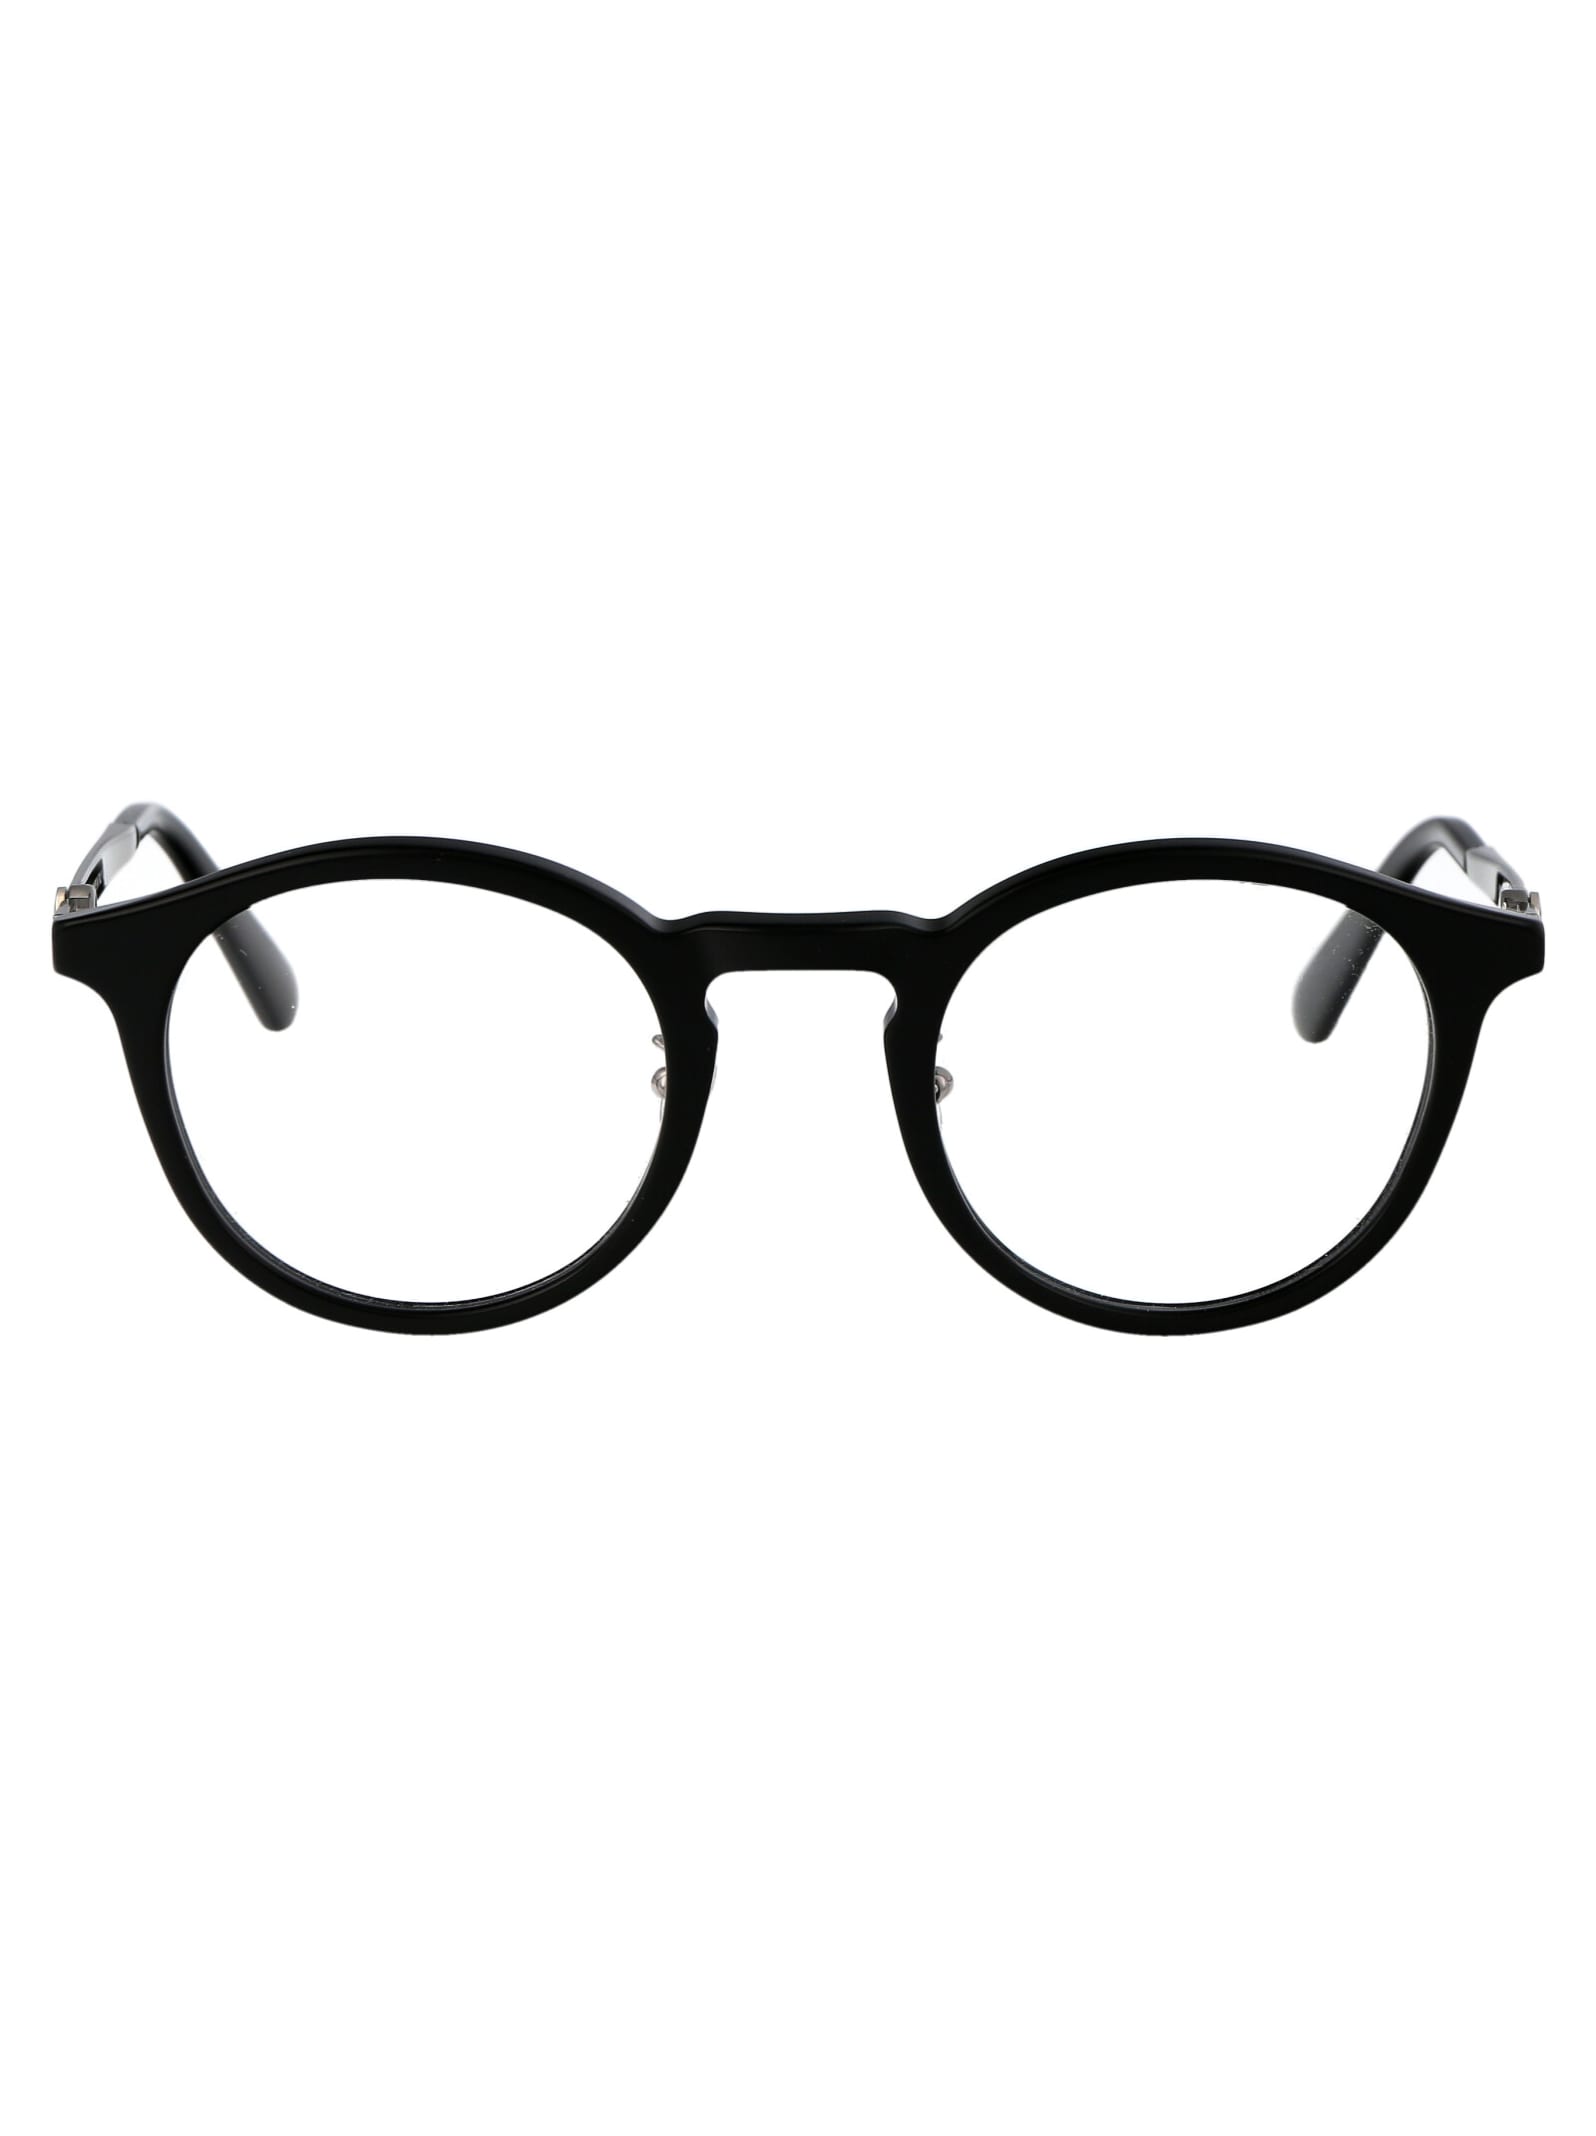 Ml5175 Glasses